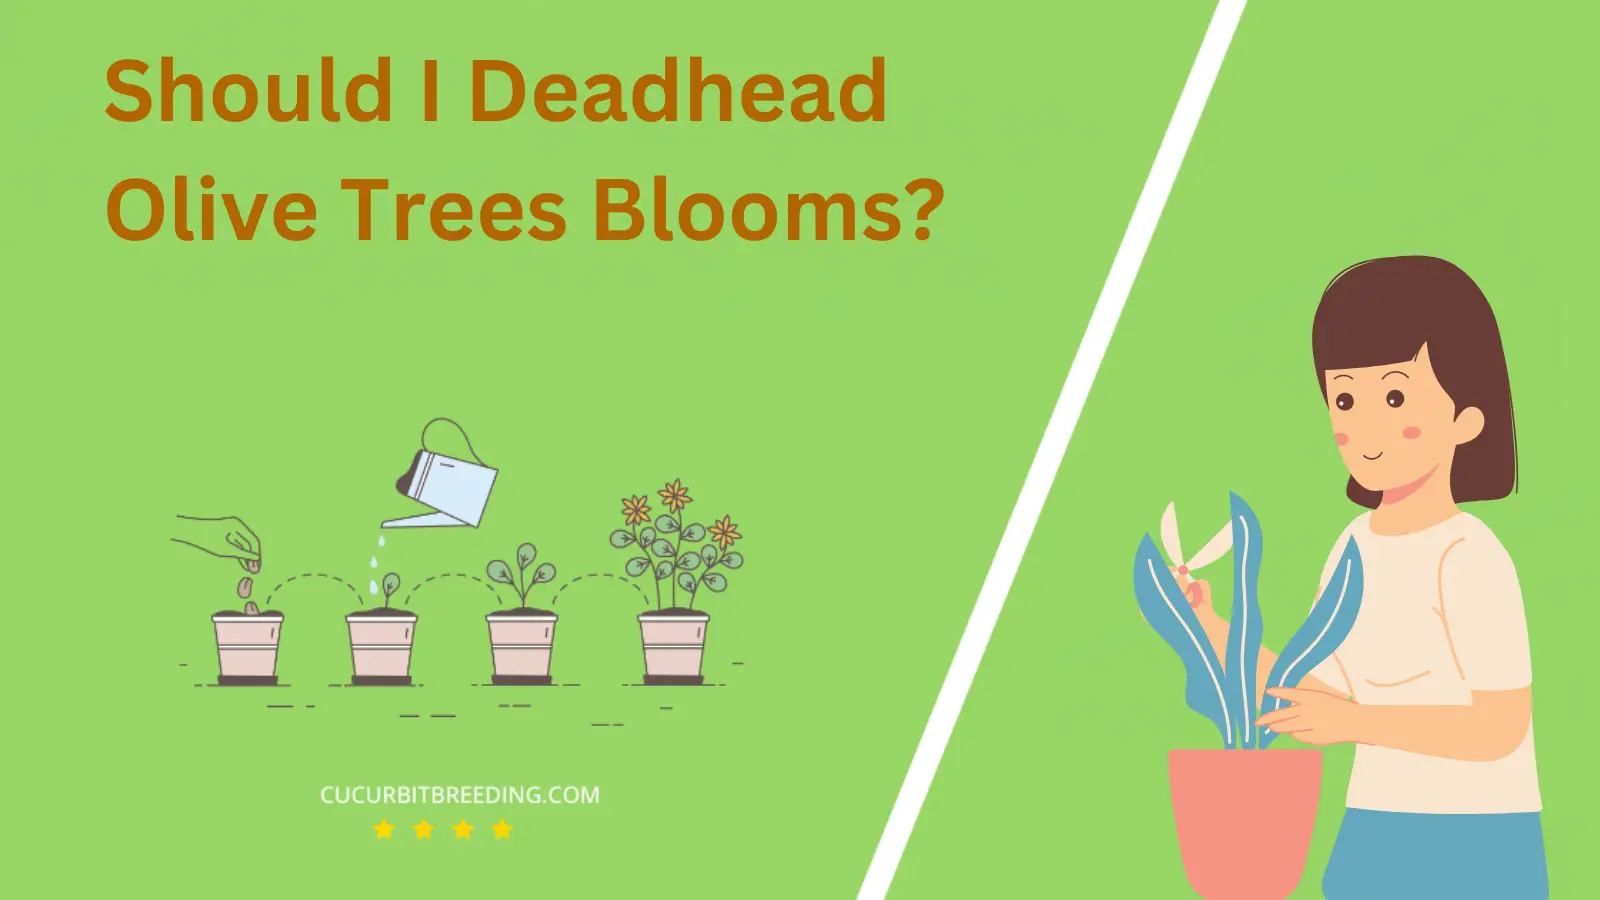 Should I Deadhead Olive Trees Blooms?